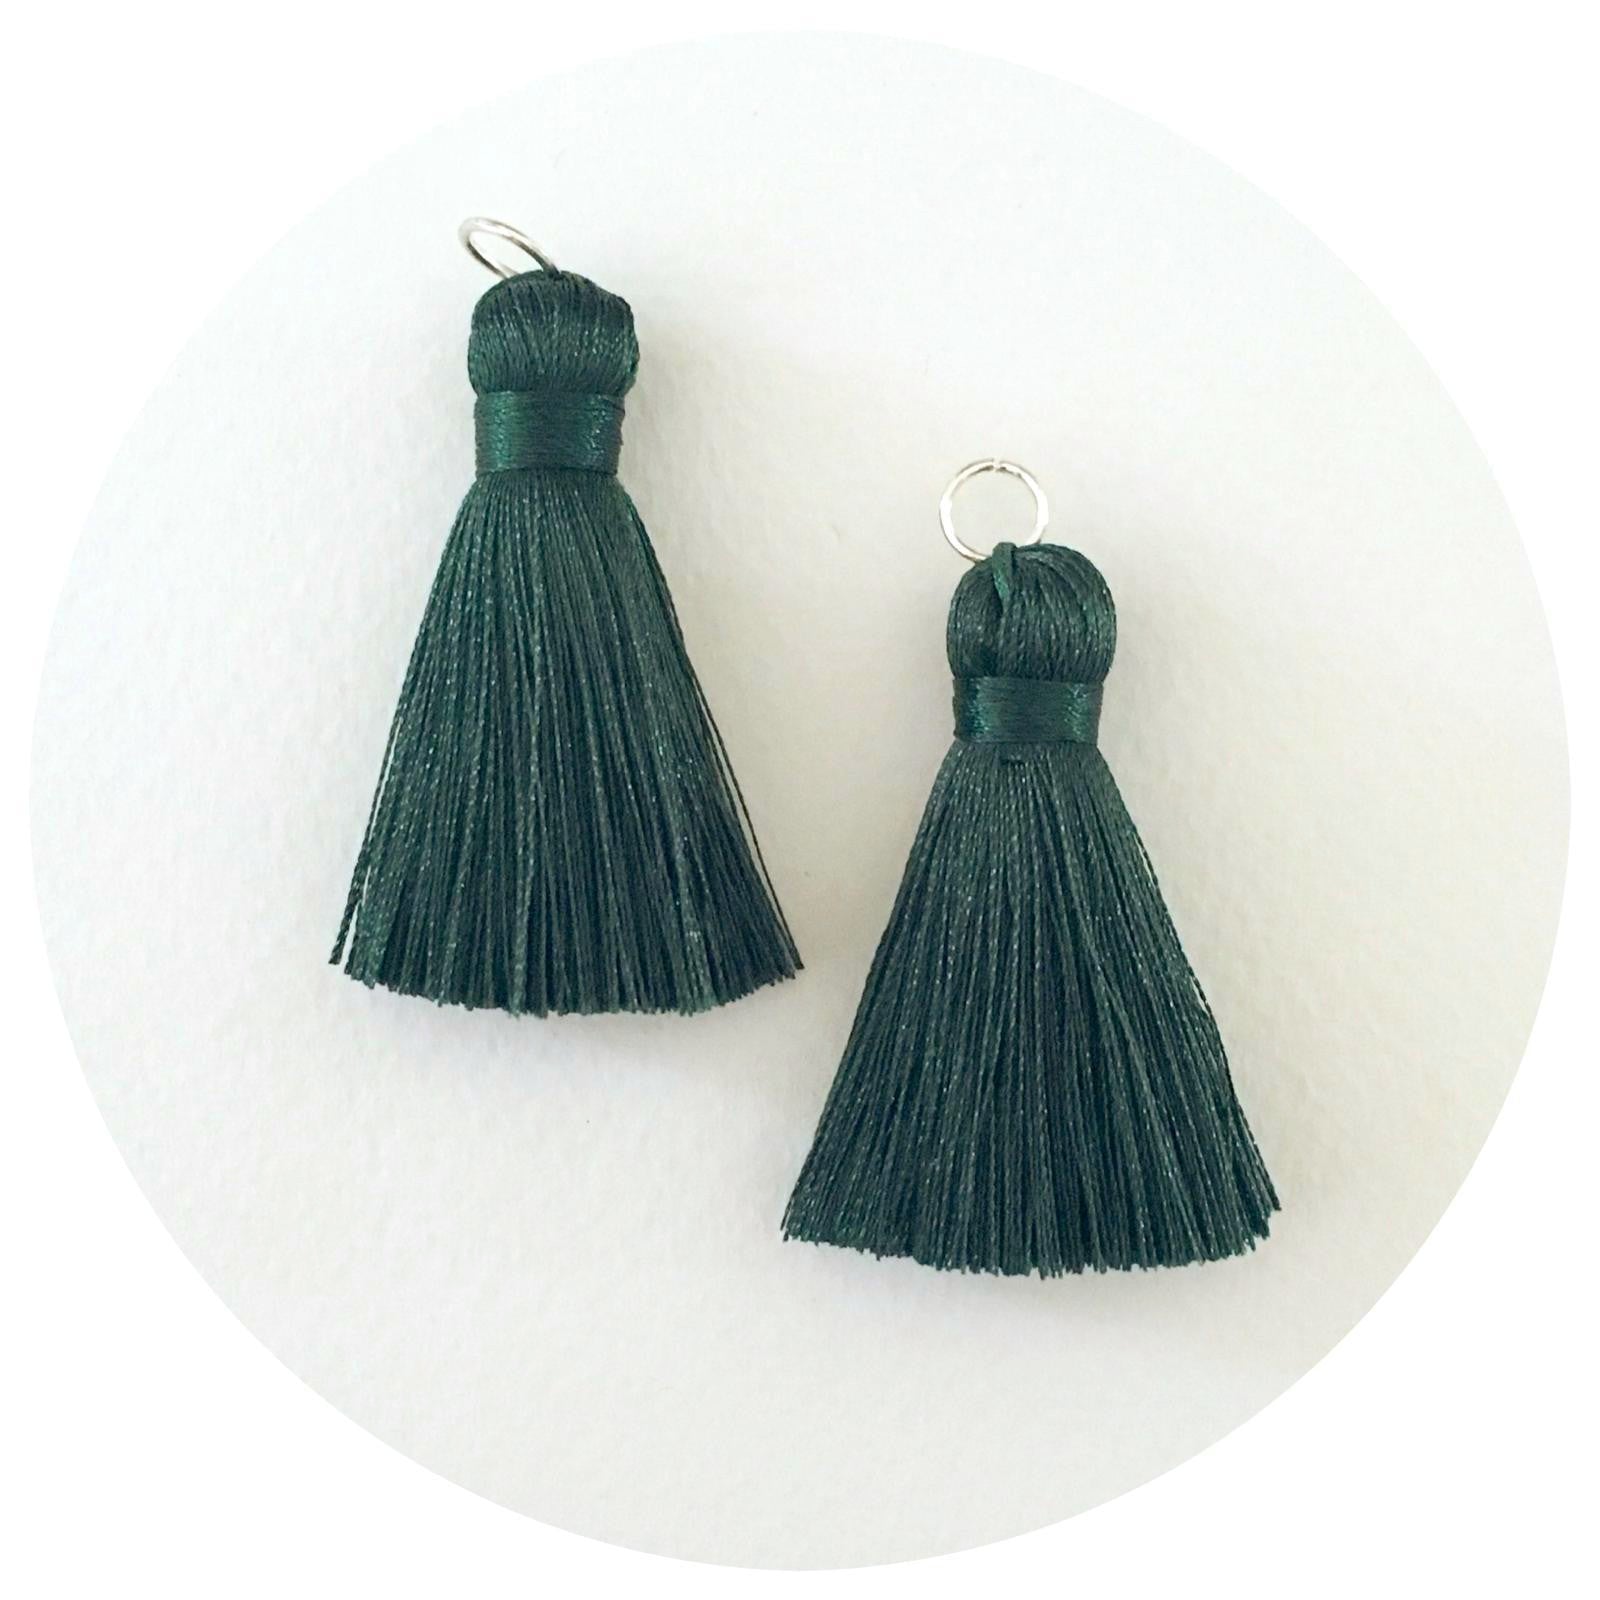 40mm Silk Tassels - Forest Green - 2pack - 8719